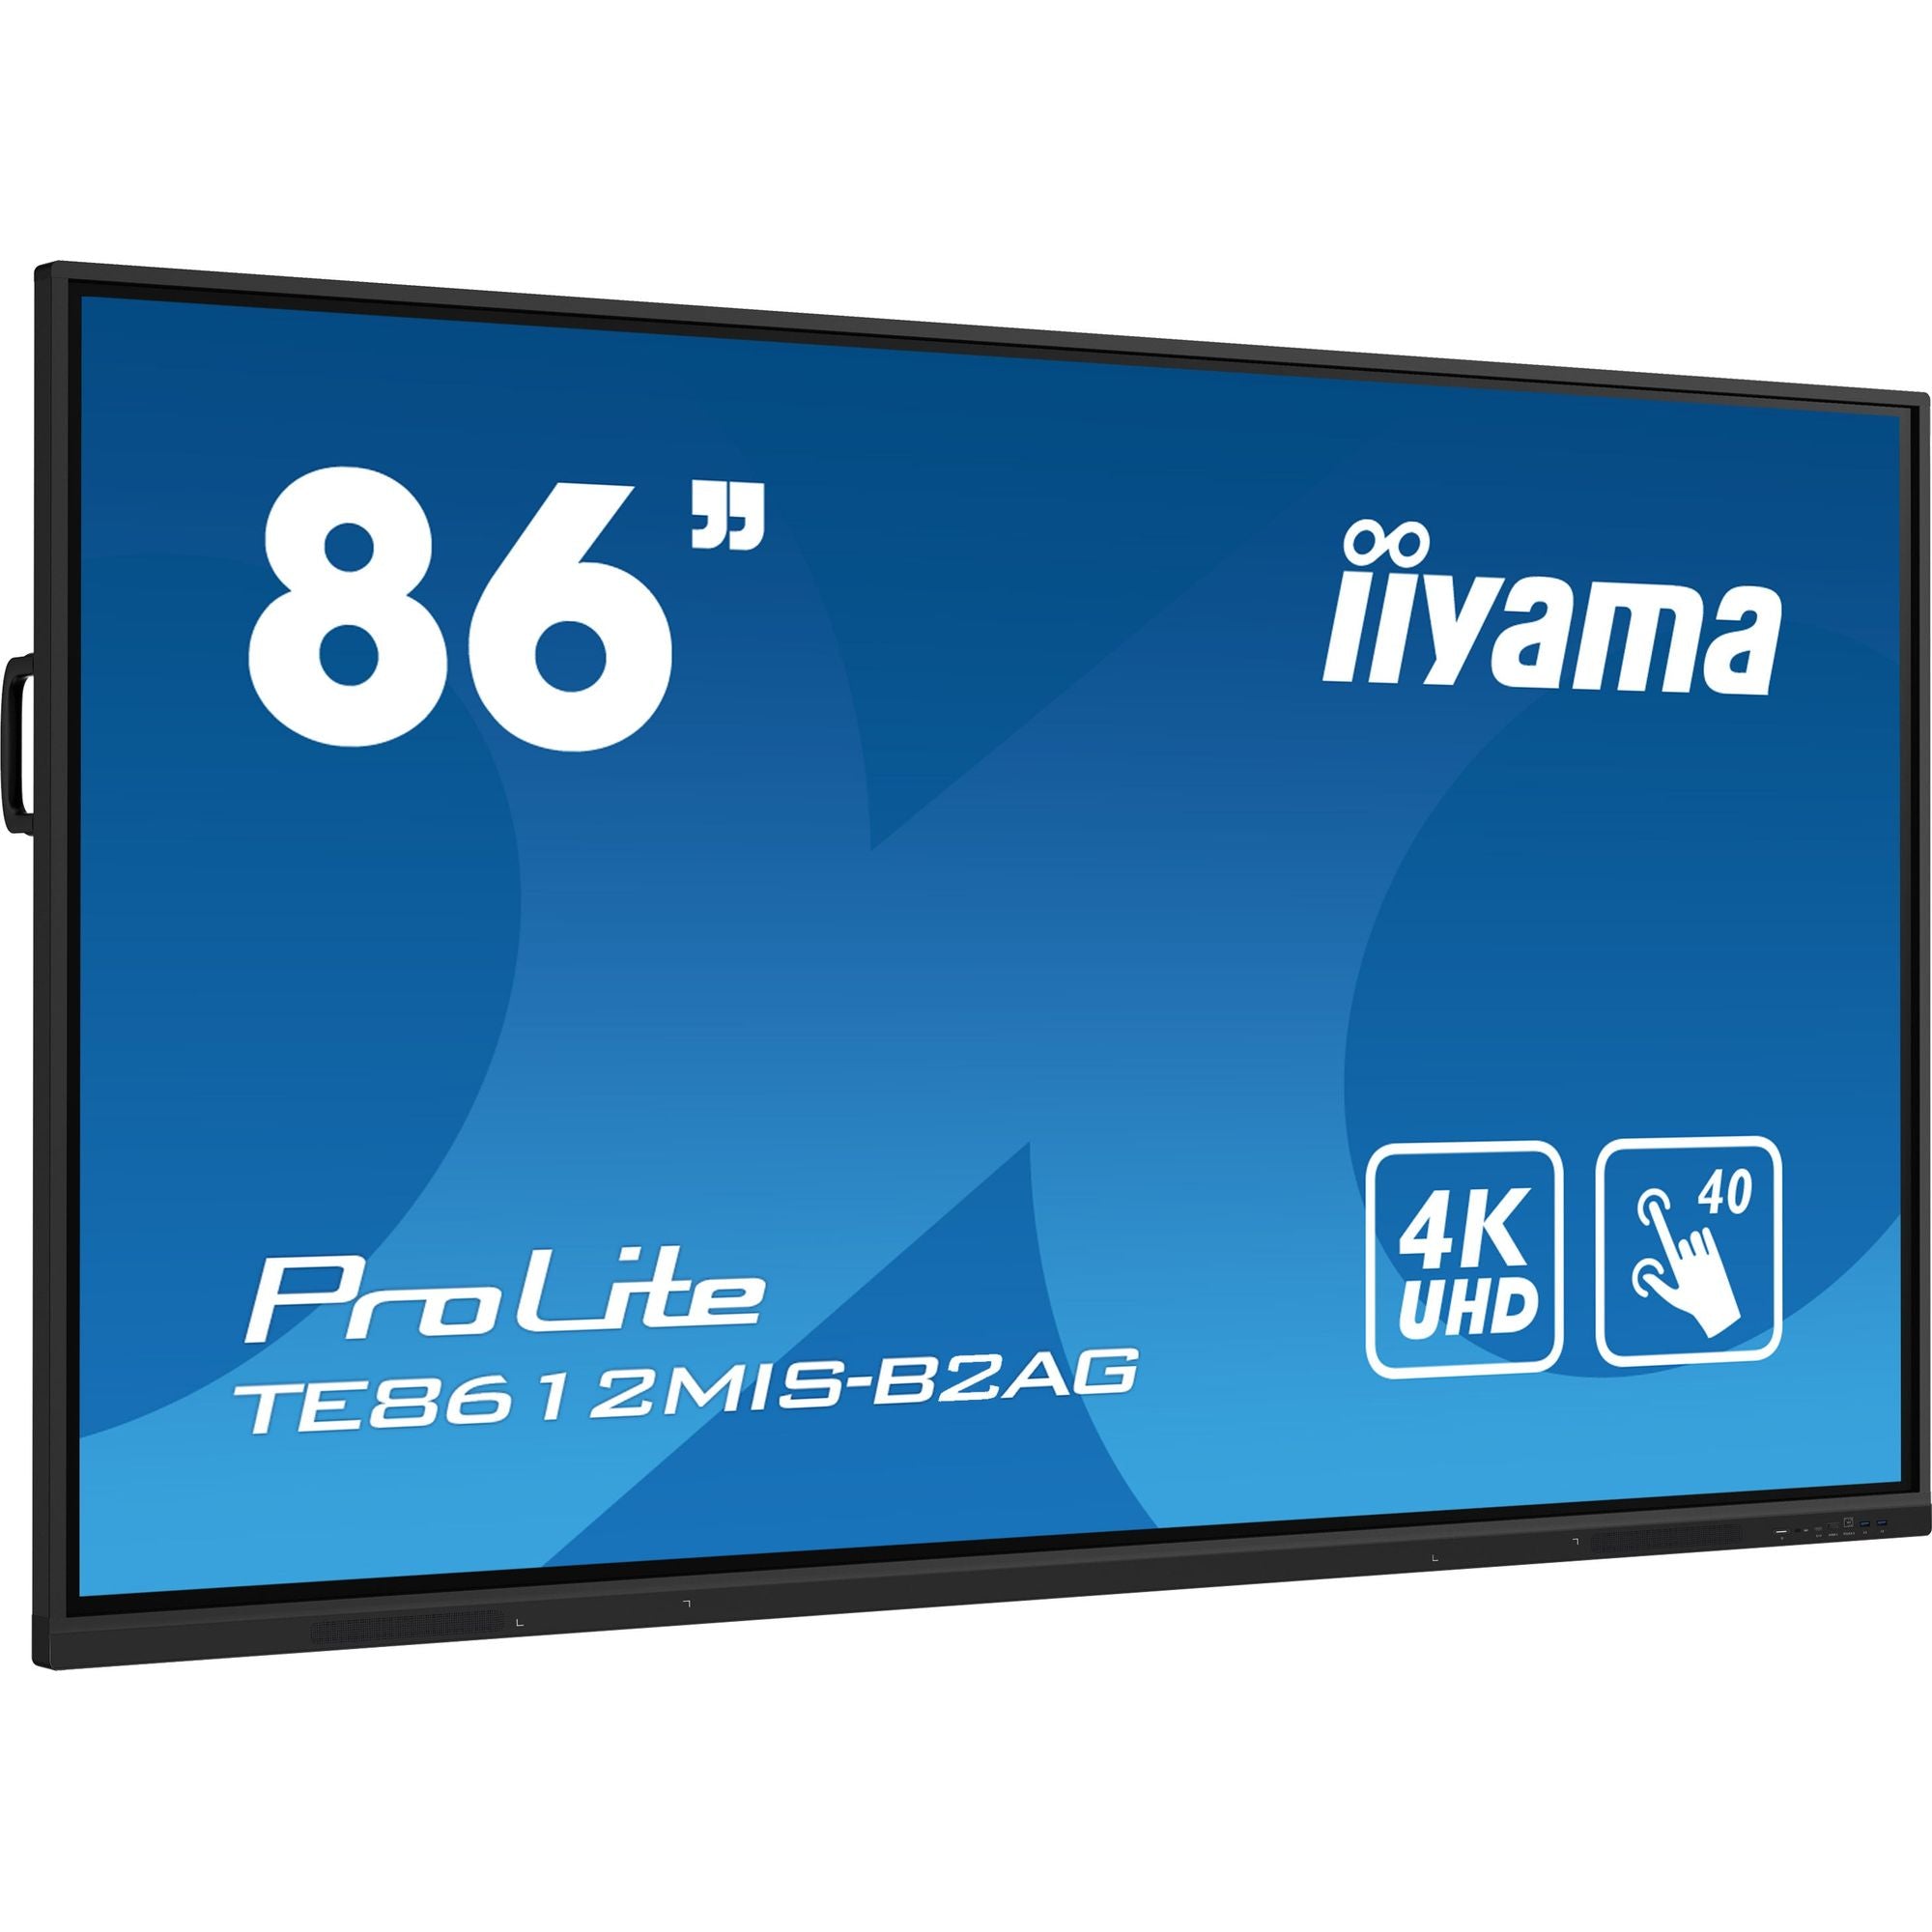 Iiyama ProLite TE8612MIS-B2AG 86" Interactive 4K UHD Touchscreen with User Profiles Software